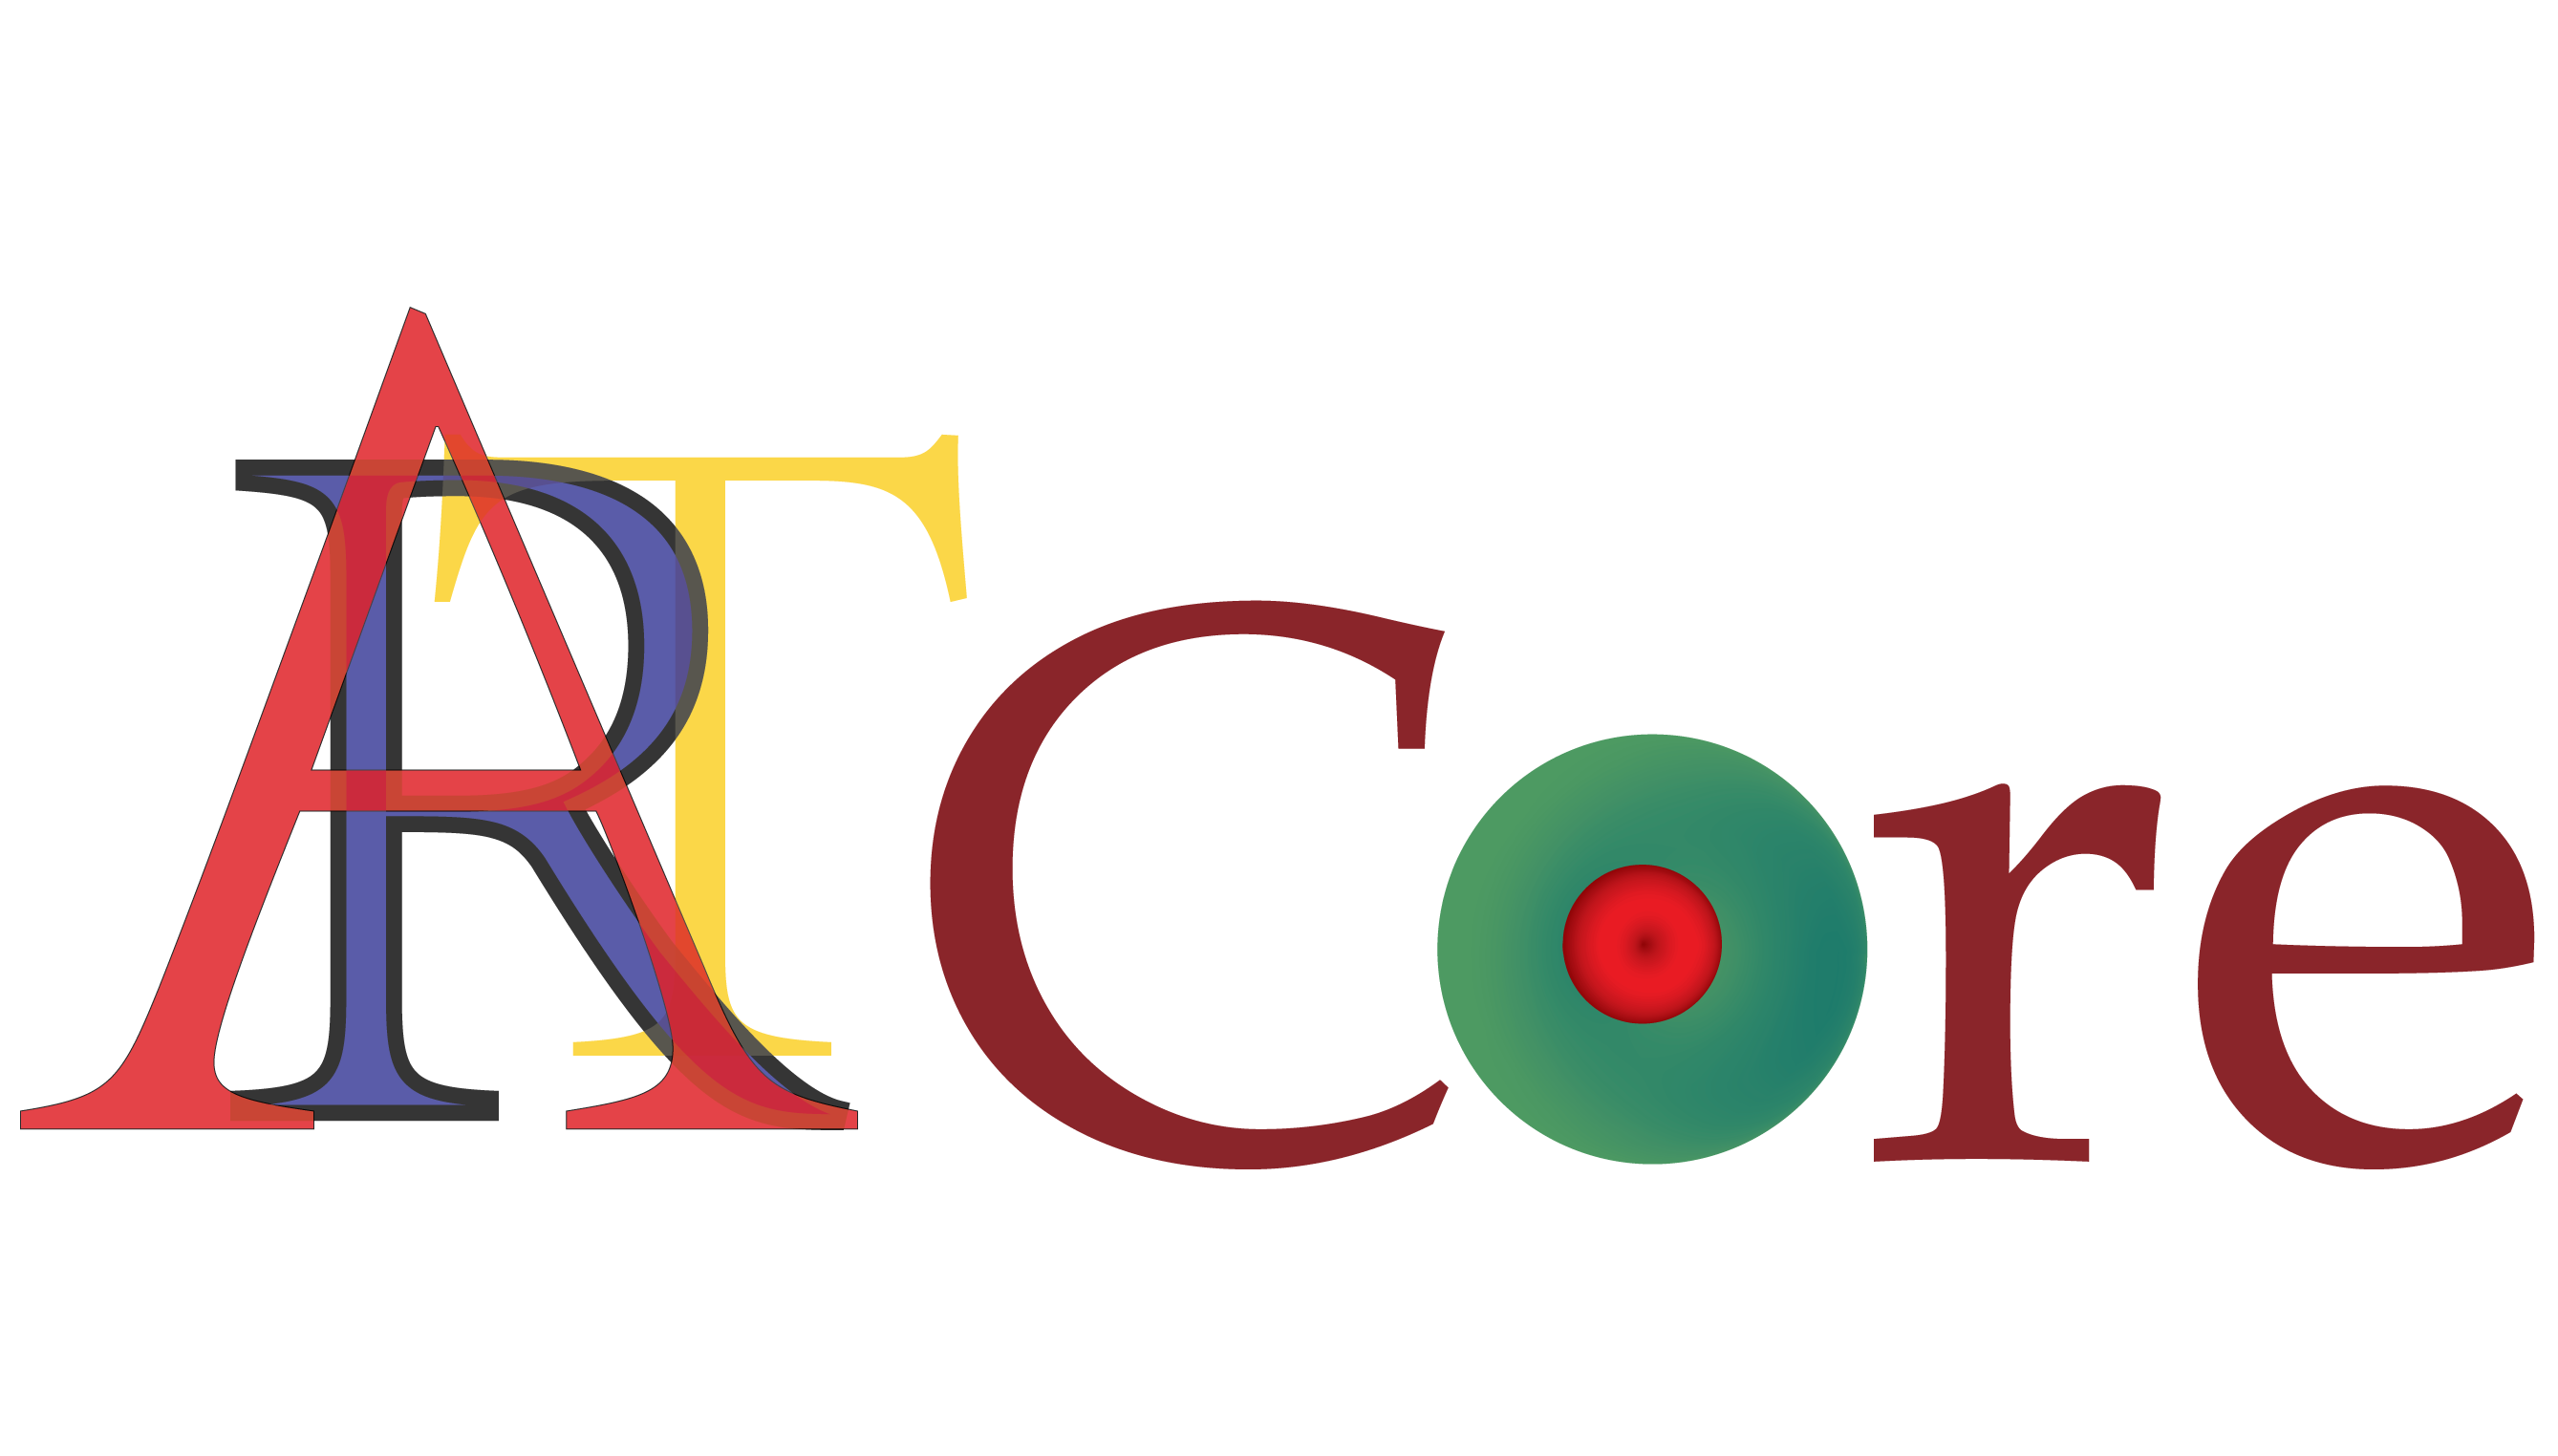 ArtCore logo